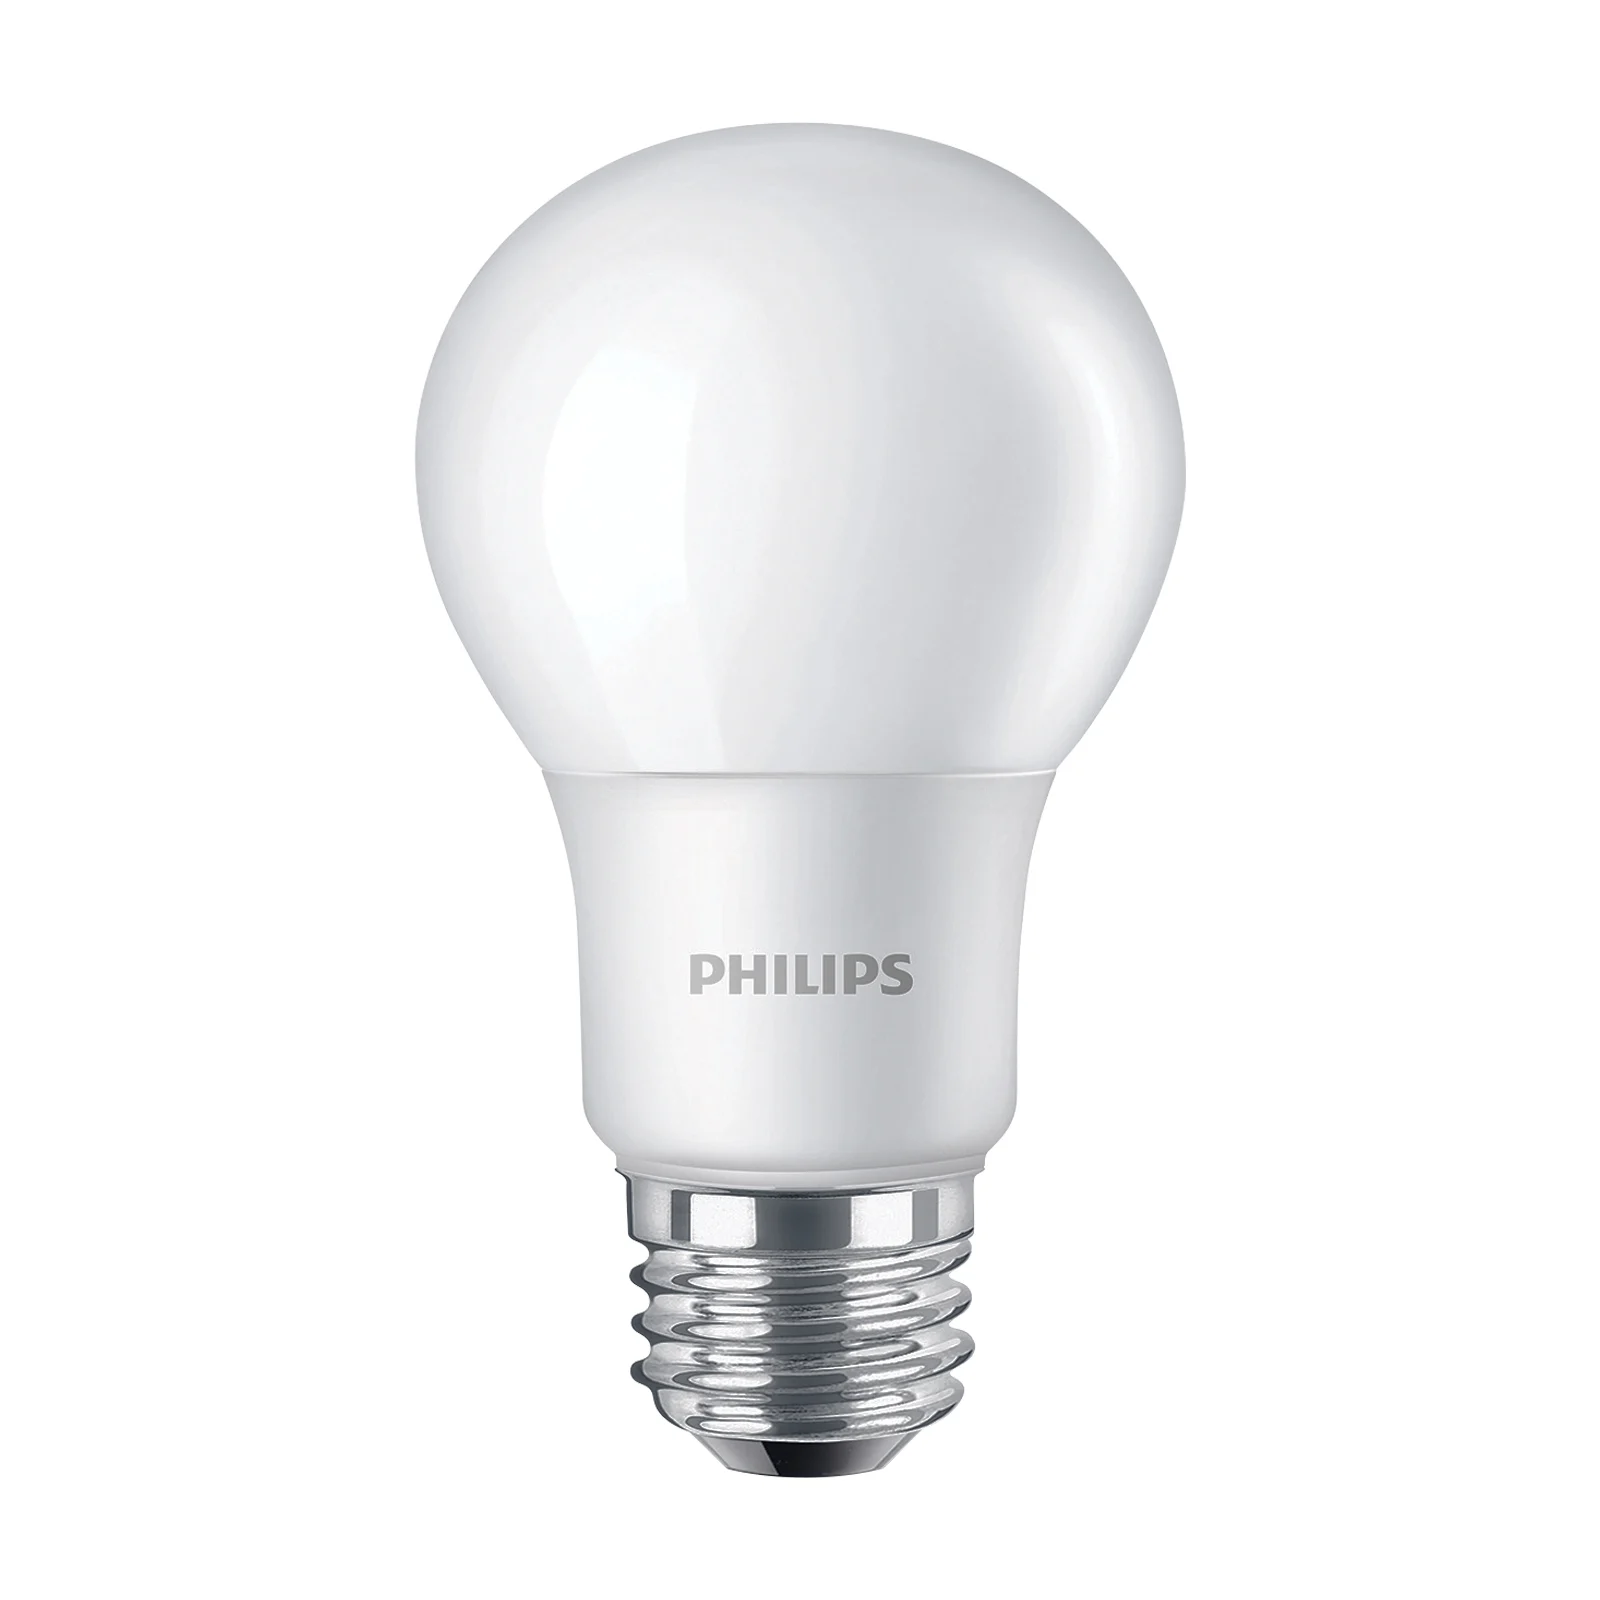 A LED light bulb